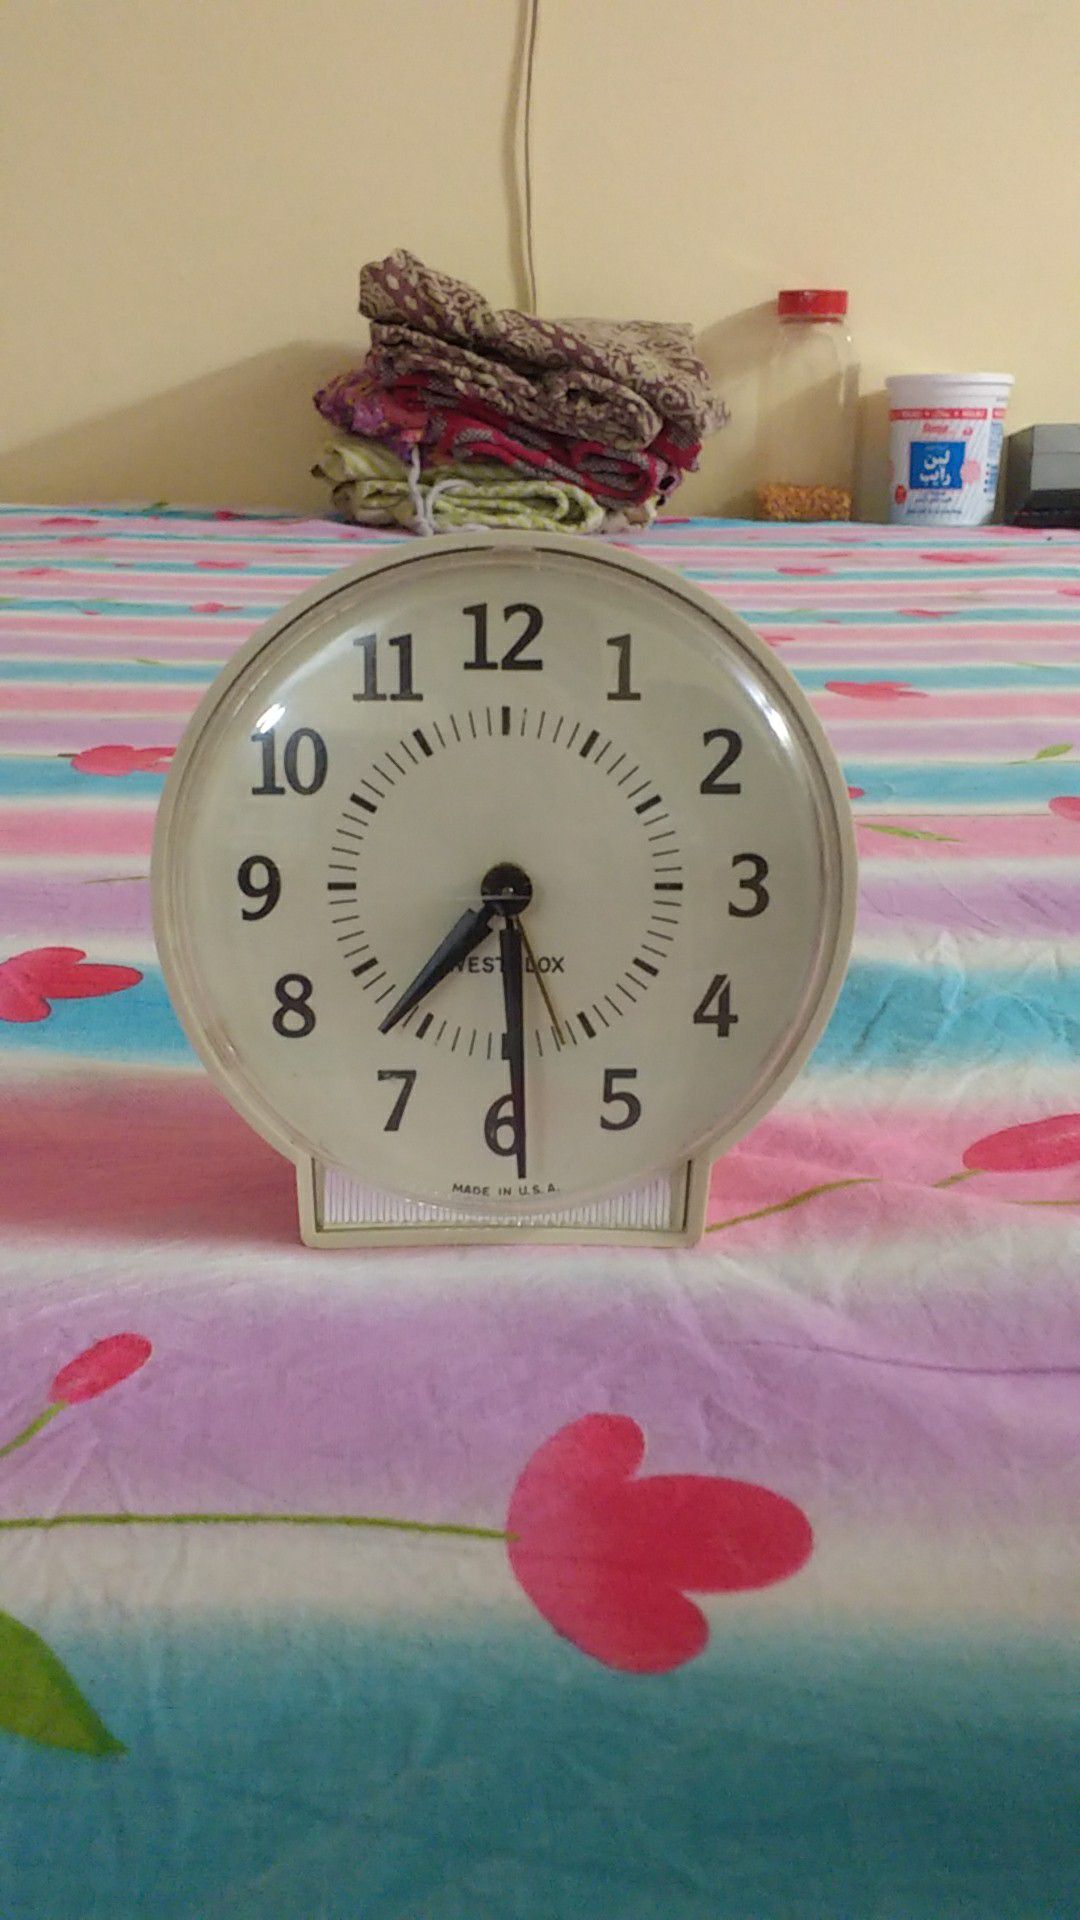 WestClox white alarm clock